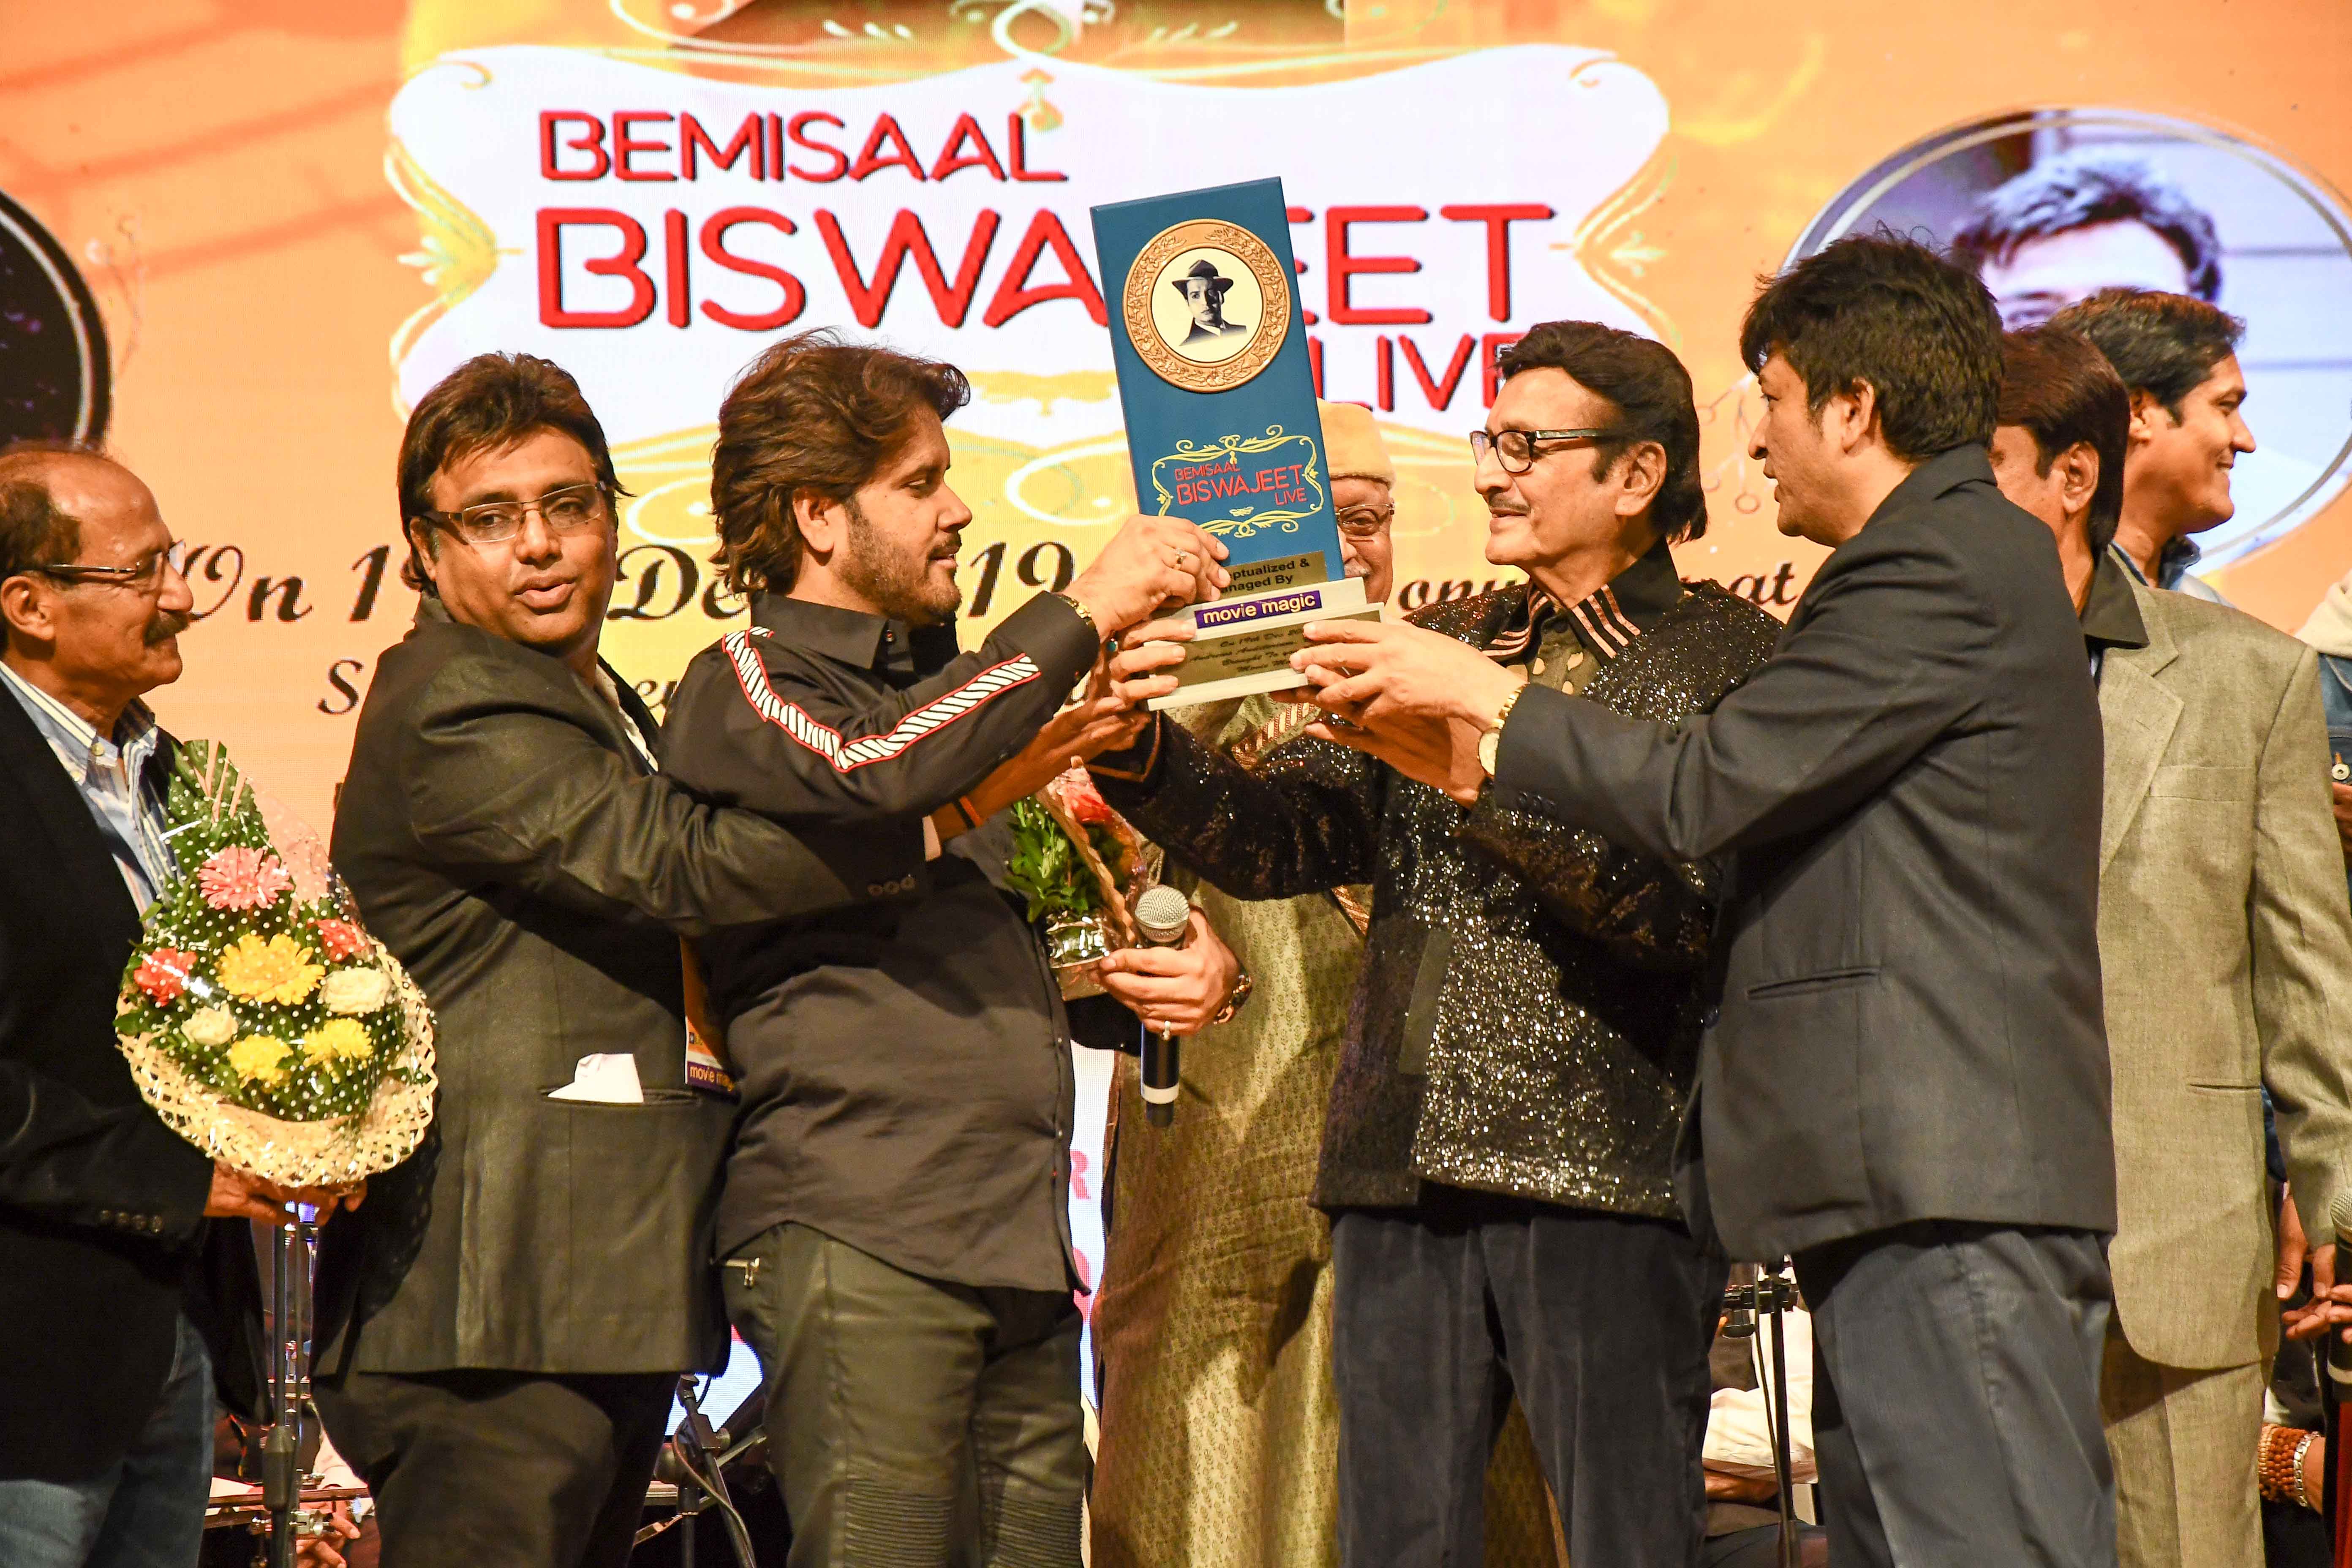 Virender Shankar, Javed Ali and Rajesh Negi (Movie Magic Entertainment) honouring Biswajeet Chaterjee during BEMISAAL BISWAJEET LIVE -Photo By Sachin Murdeshwar GPN